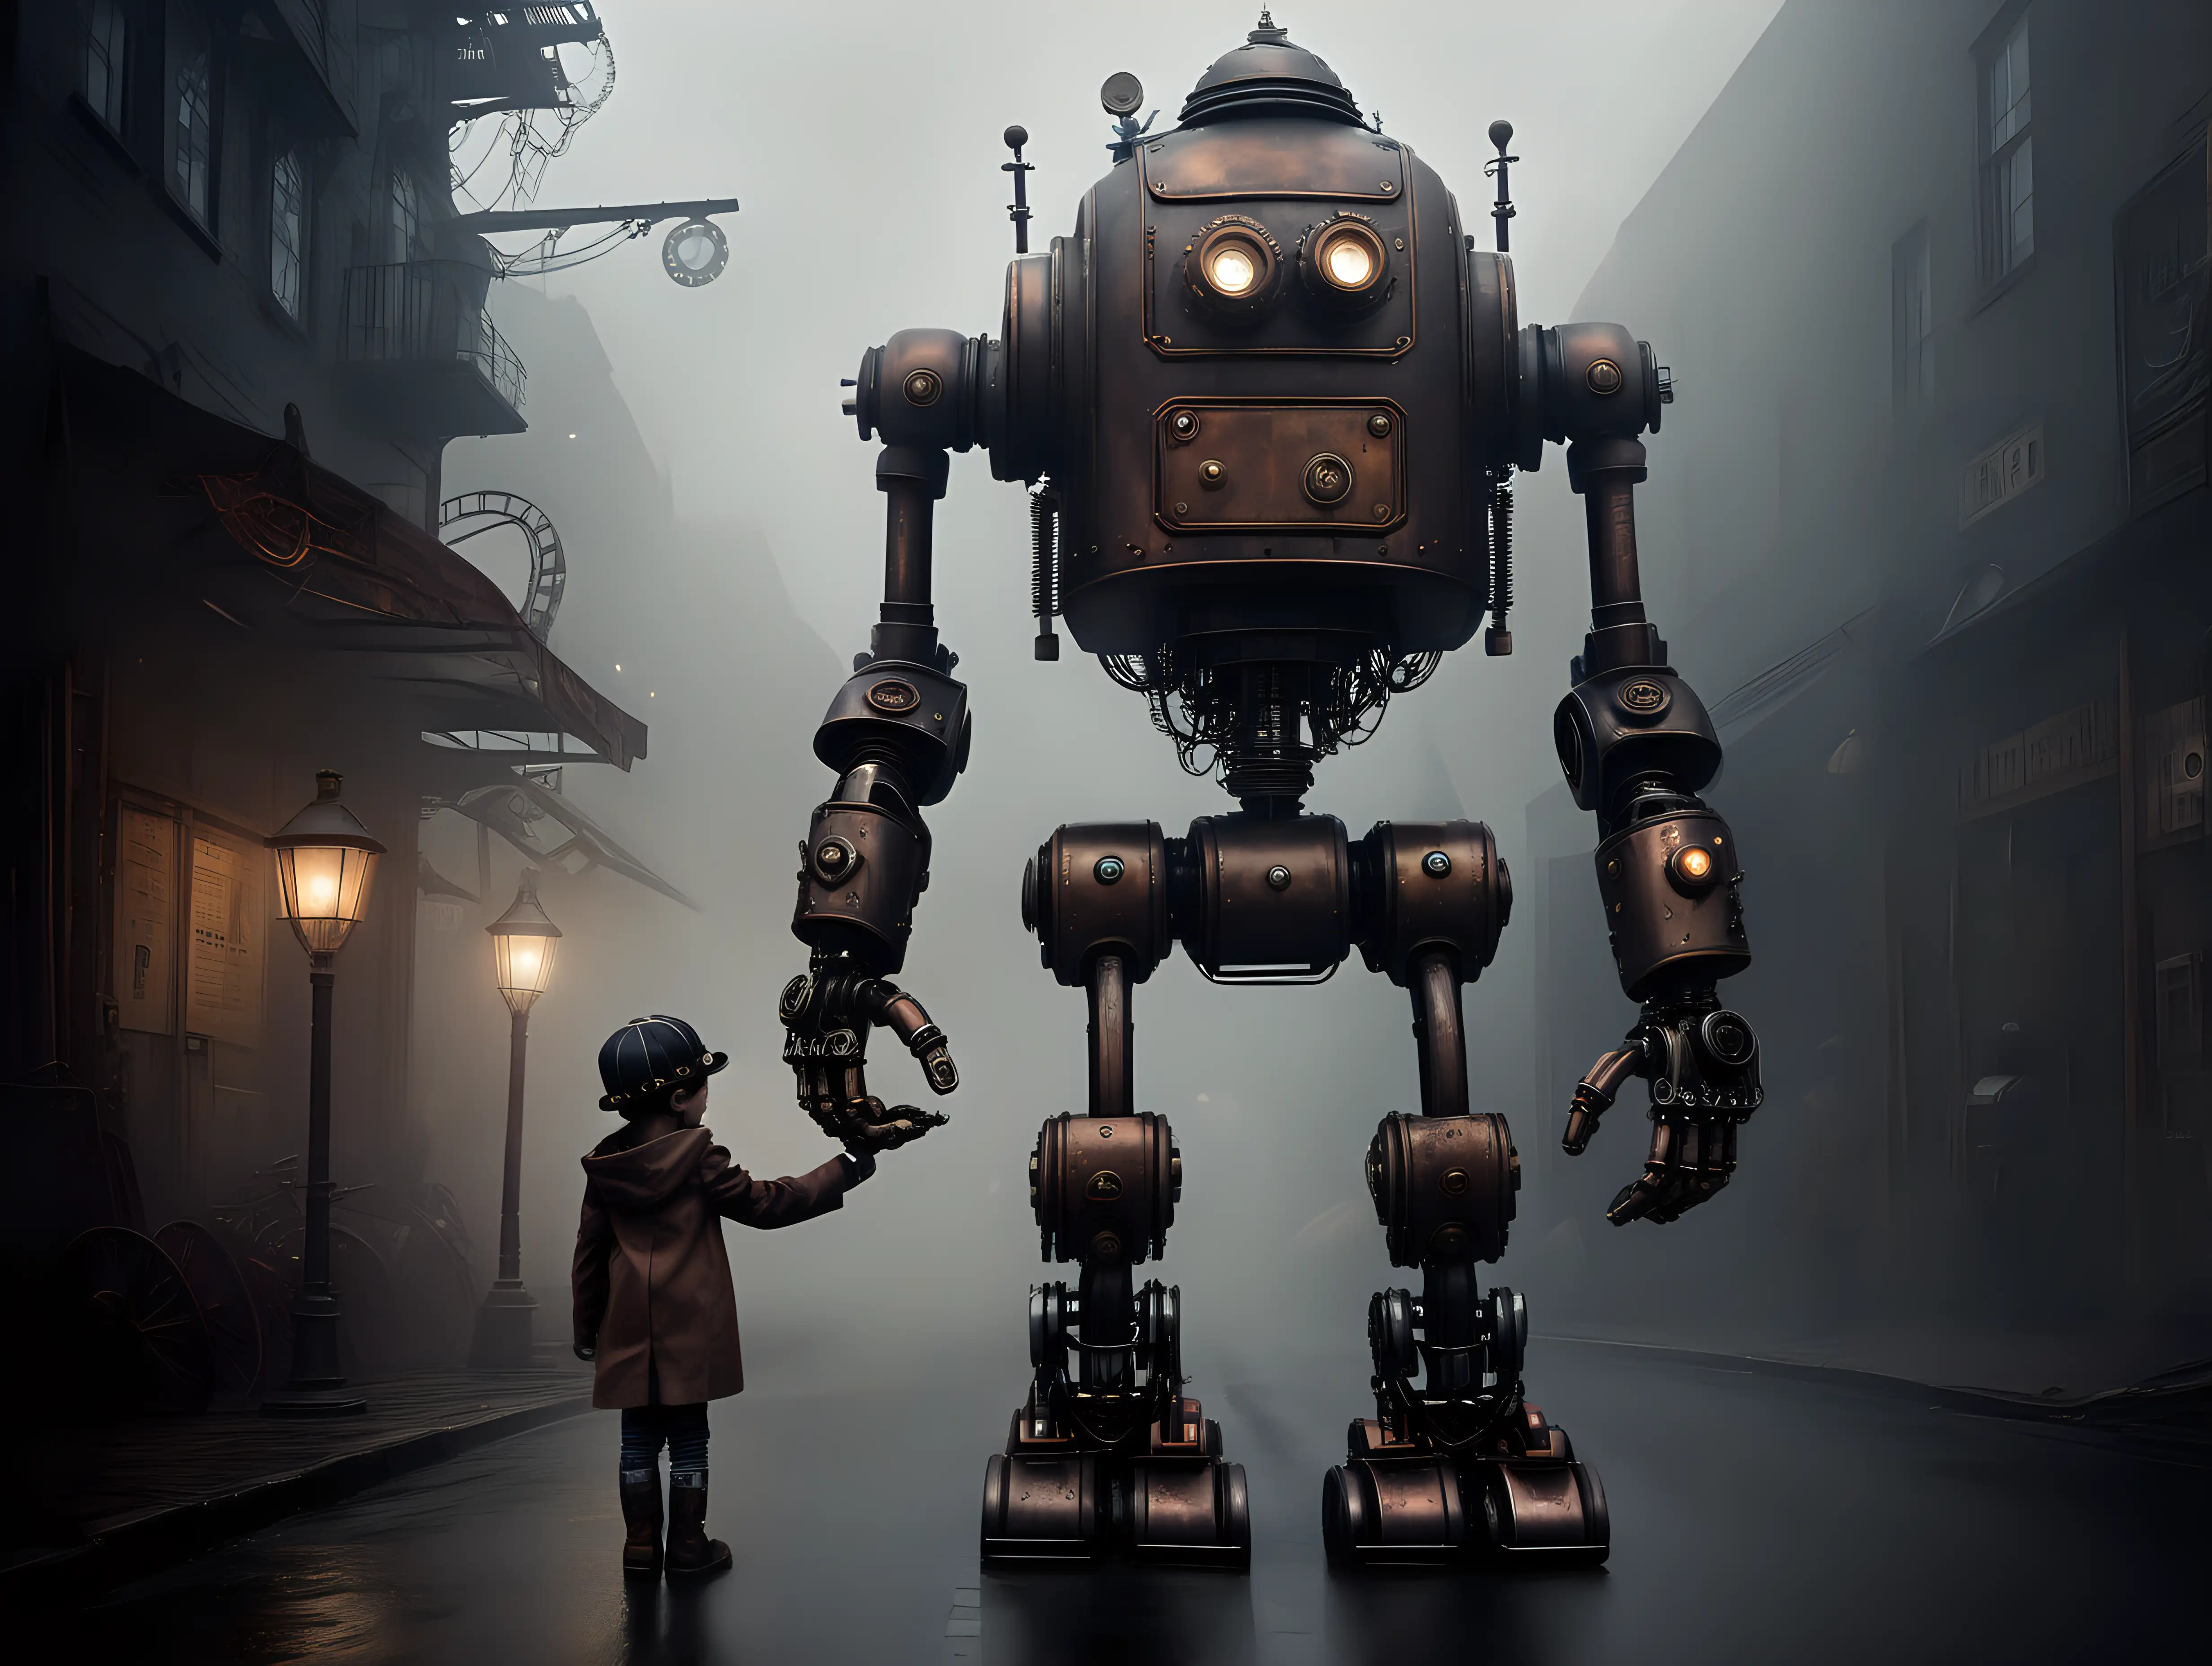 Enchanting Steampunk Robot Stroll Through Misty City Streets